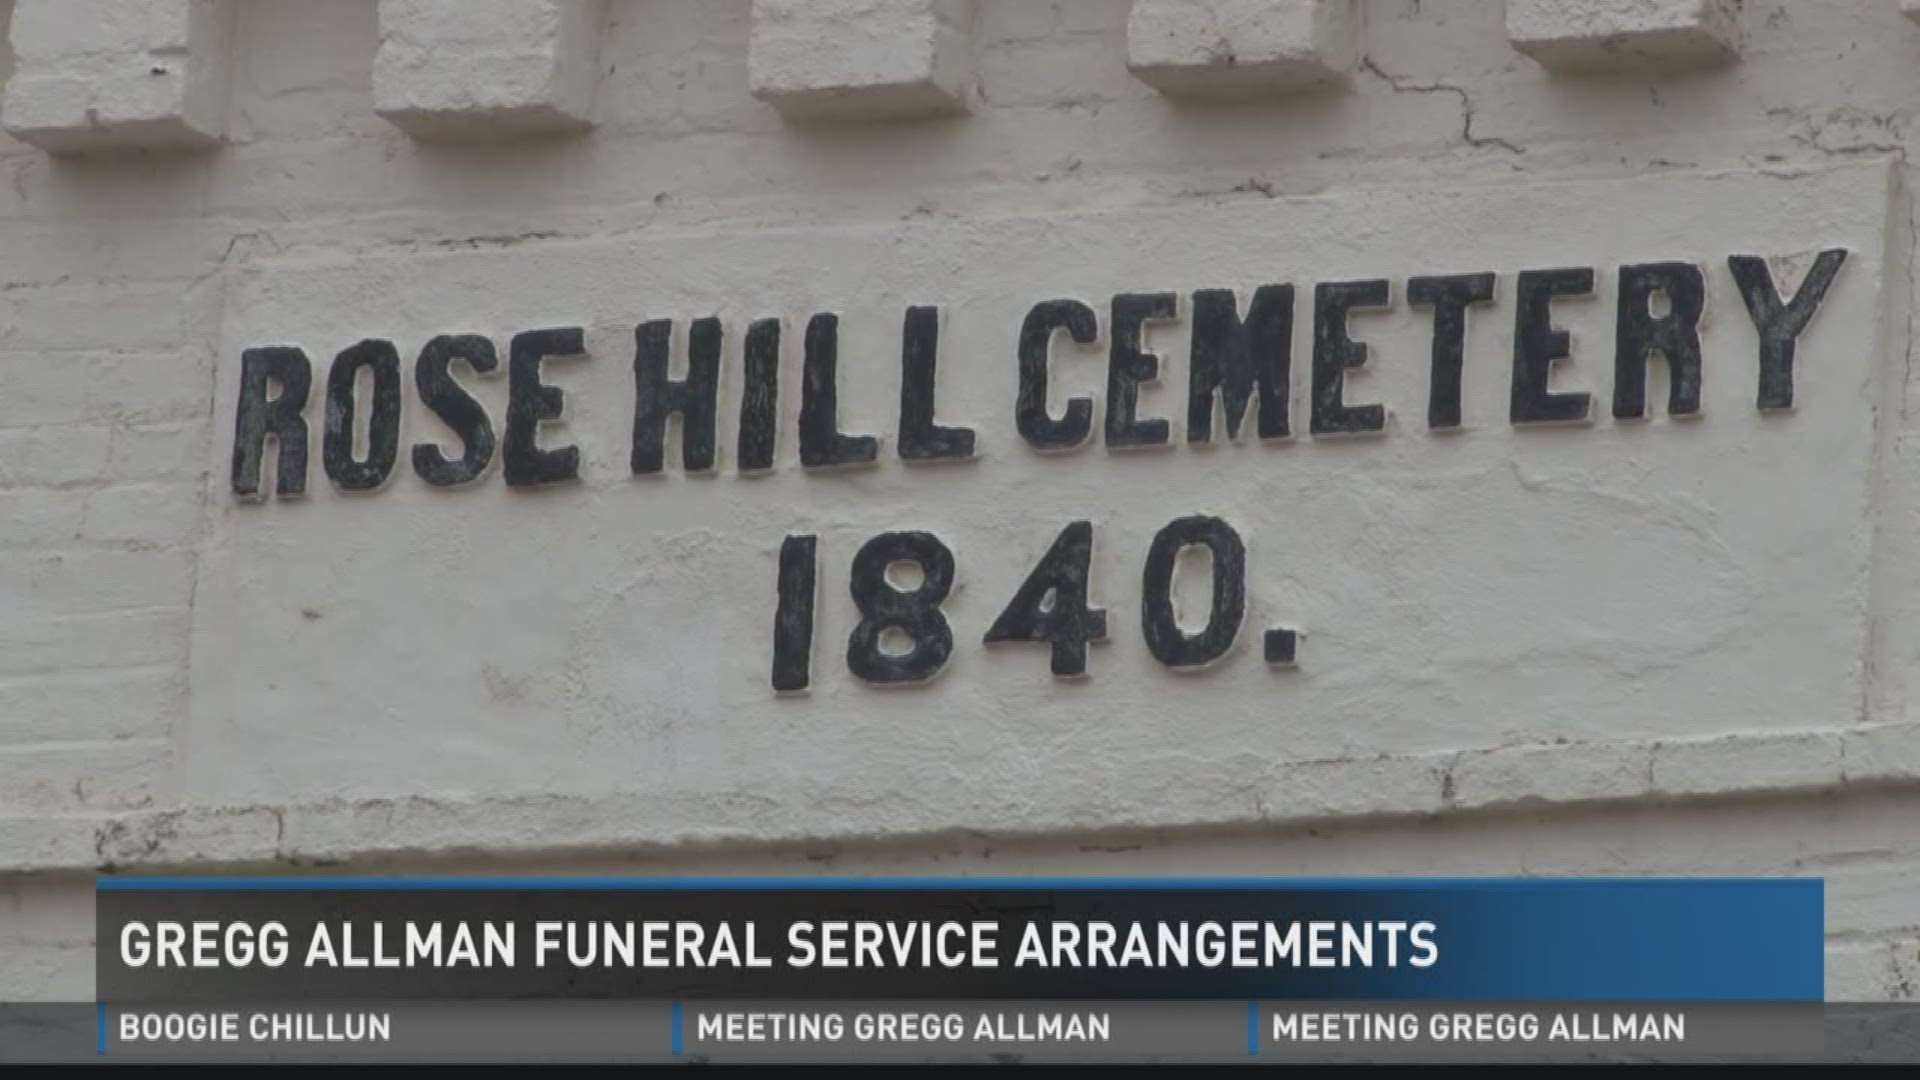 Gregg Allman funeral service arrangements